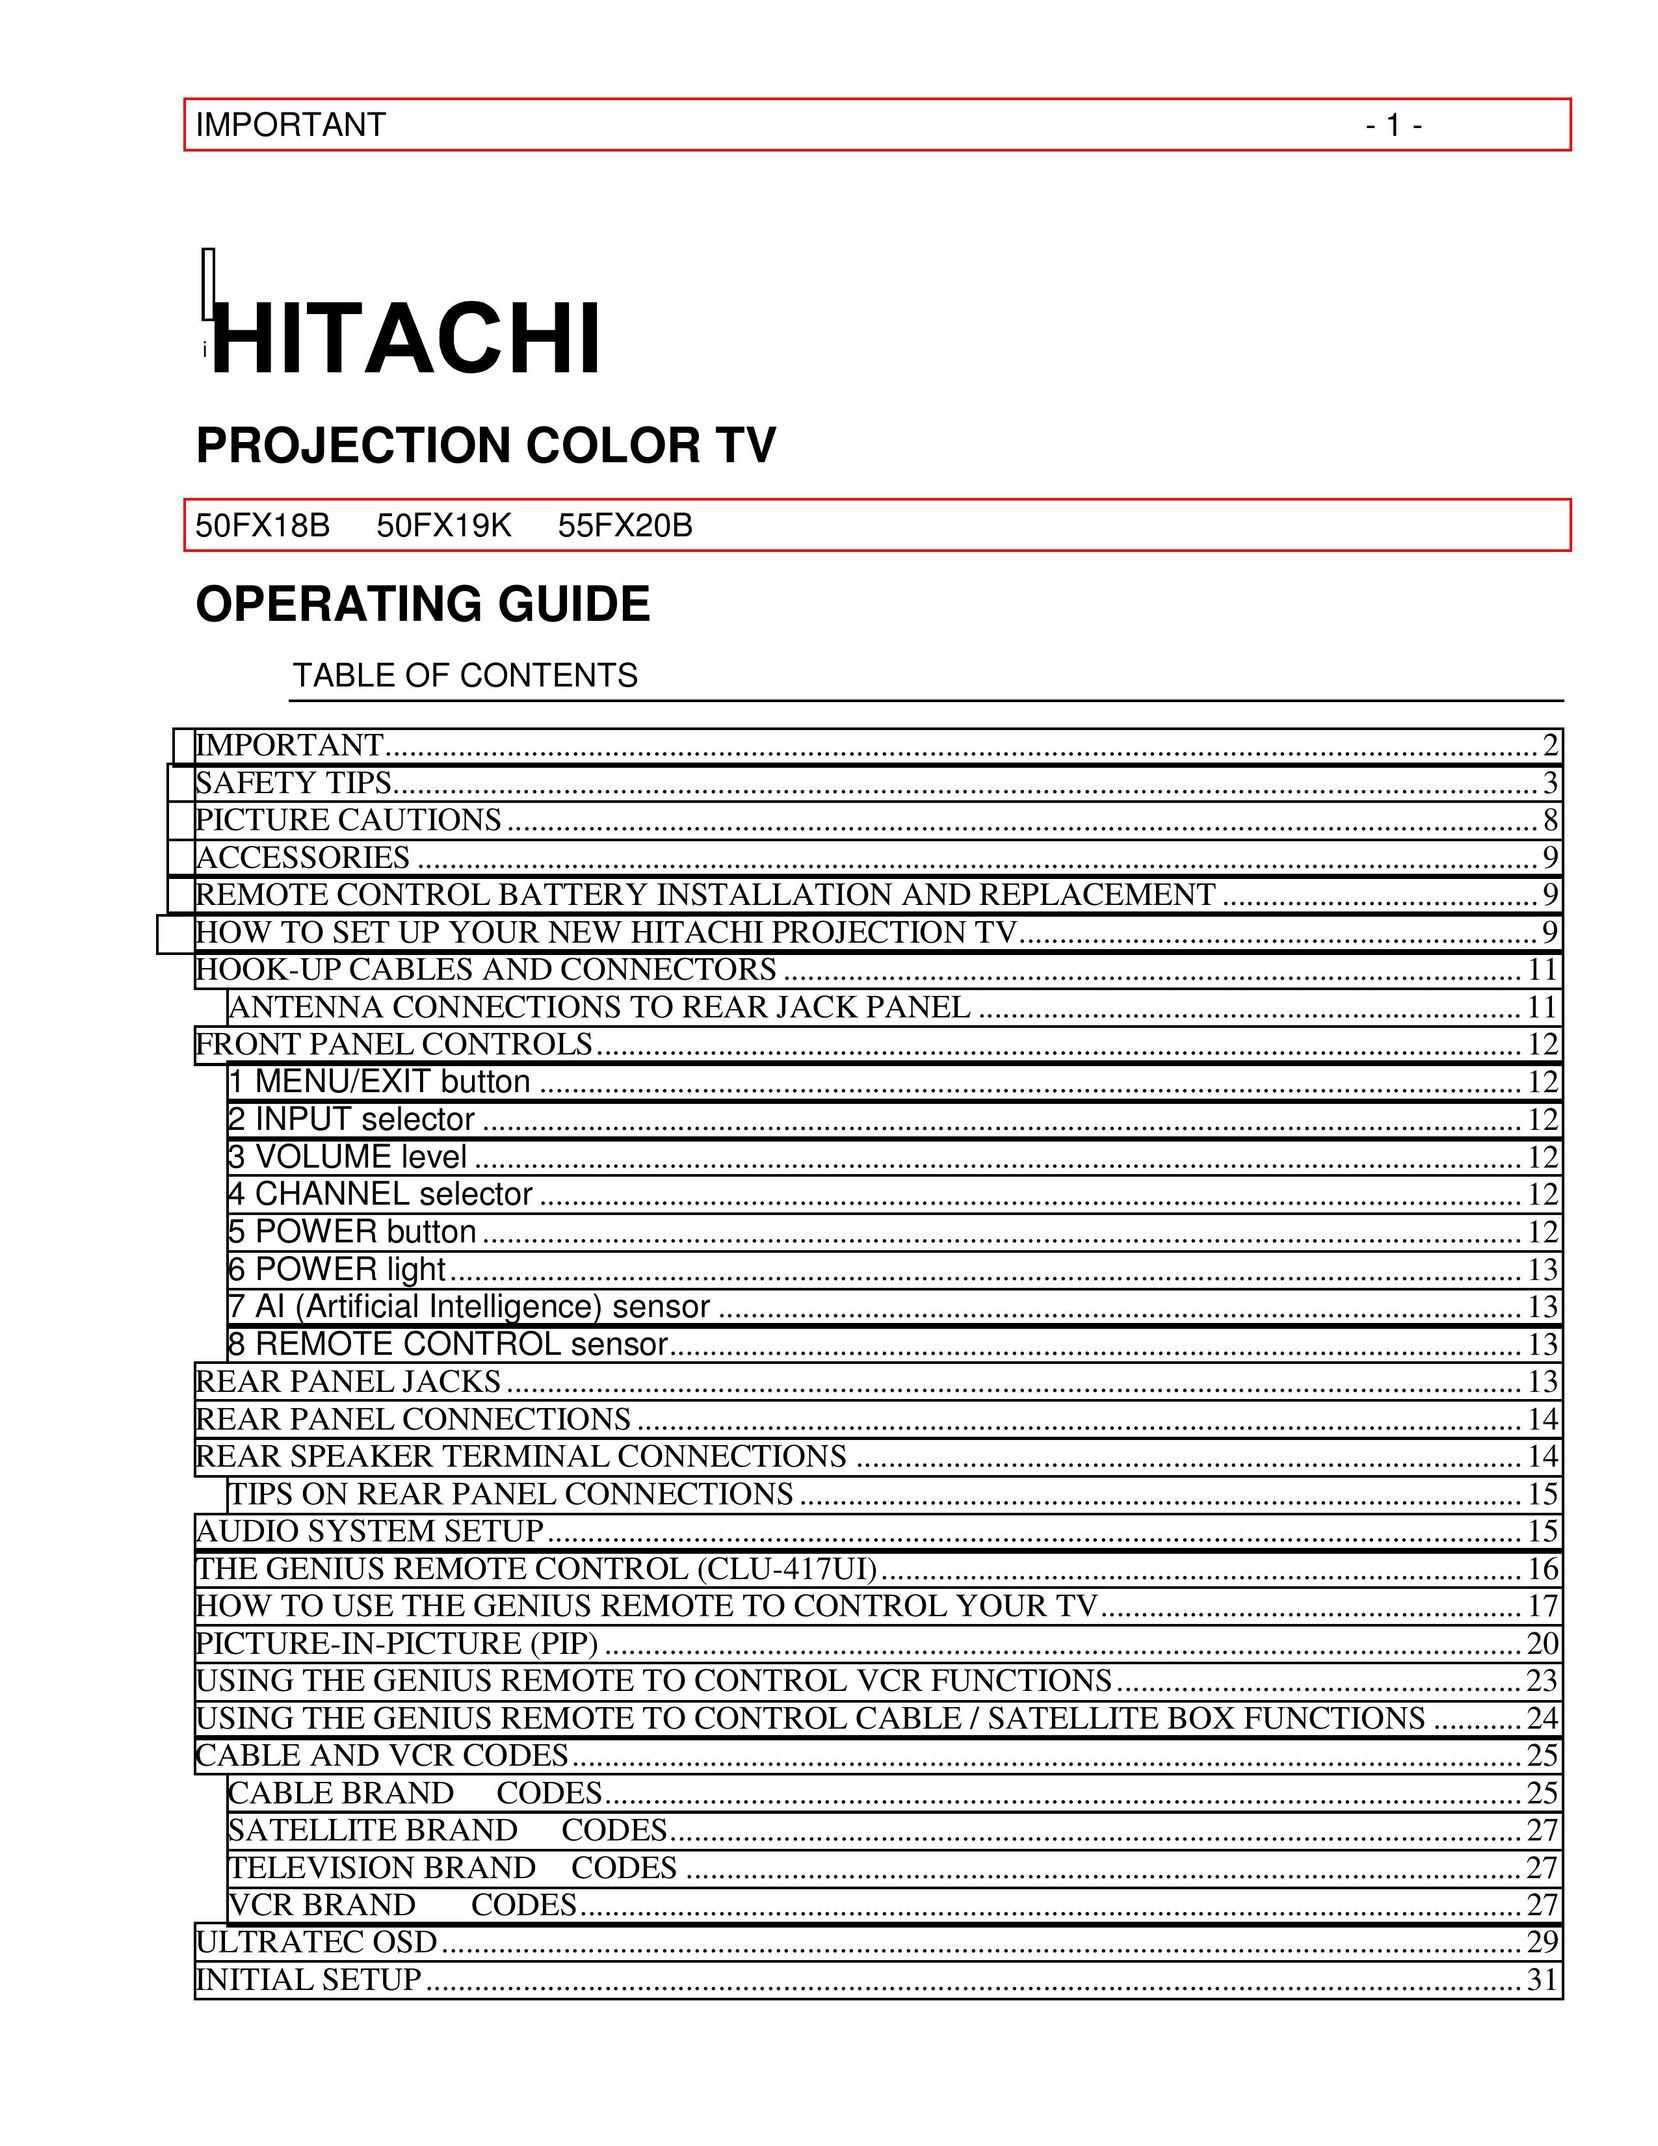 Hitachi 50FX19K CRT Television User Manual